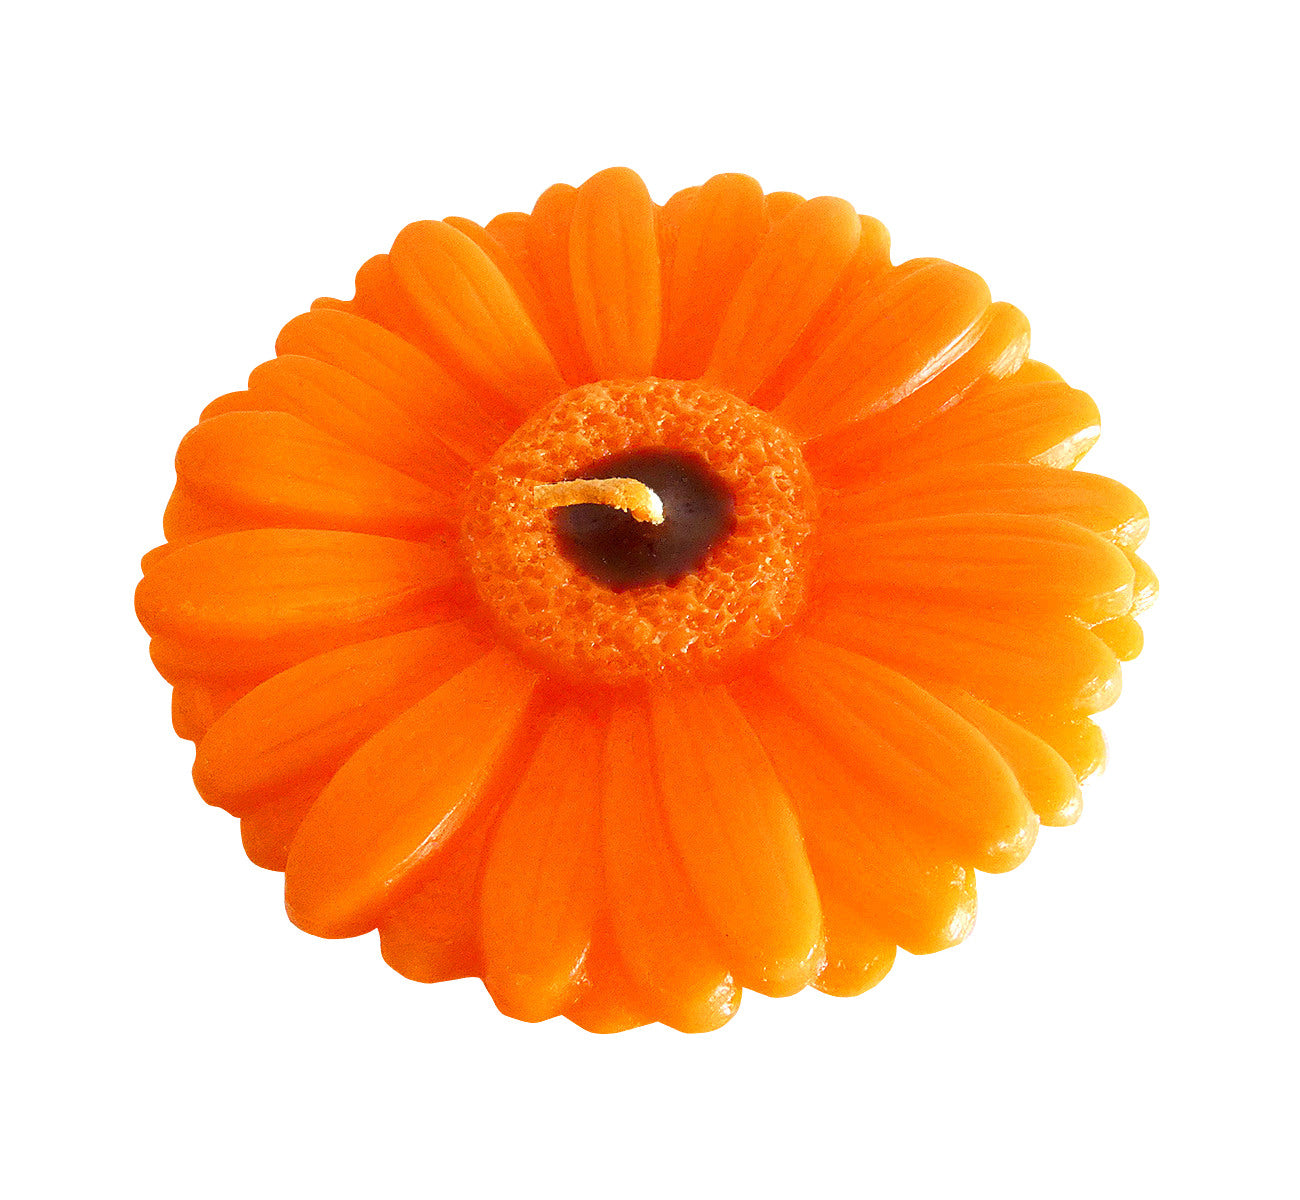 Handmade gerbera flower candle orange, height 6 cm 2.36", diameter 10 cm 3.94".